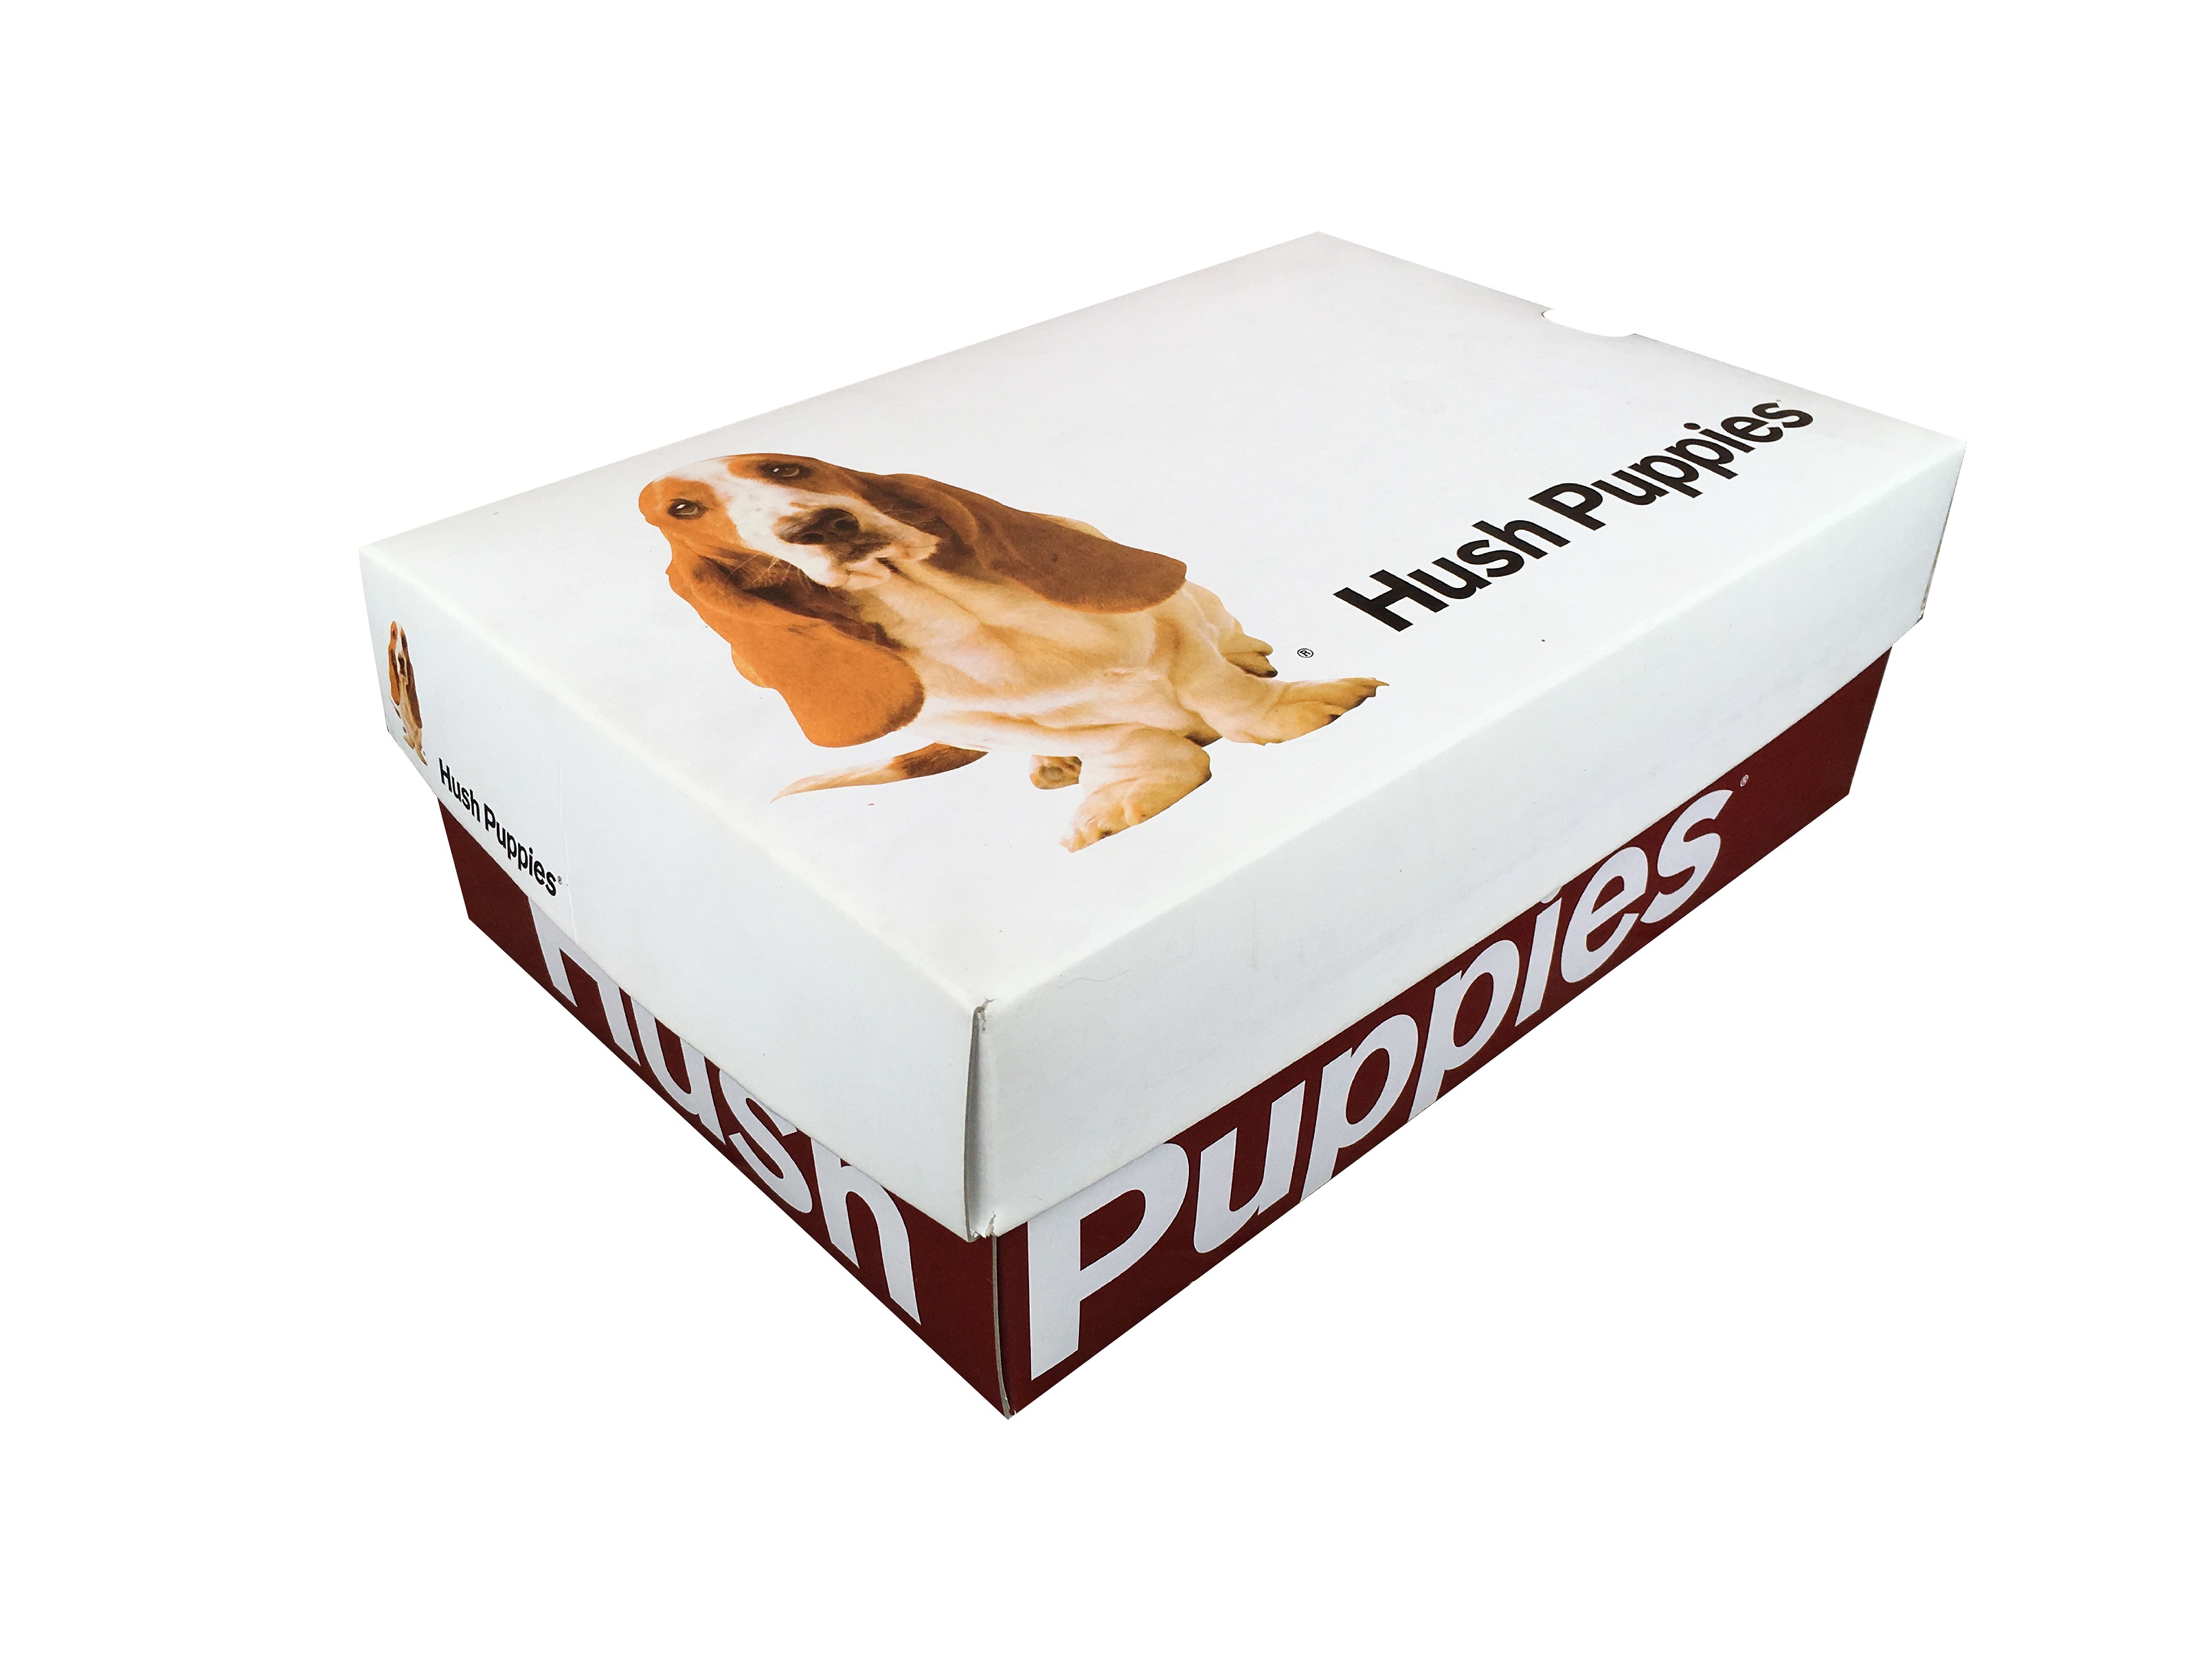 hush puppies shoe box